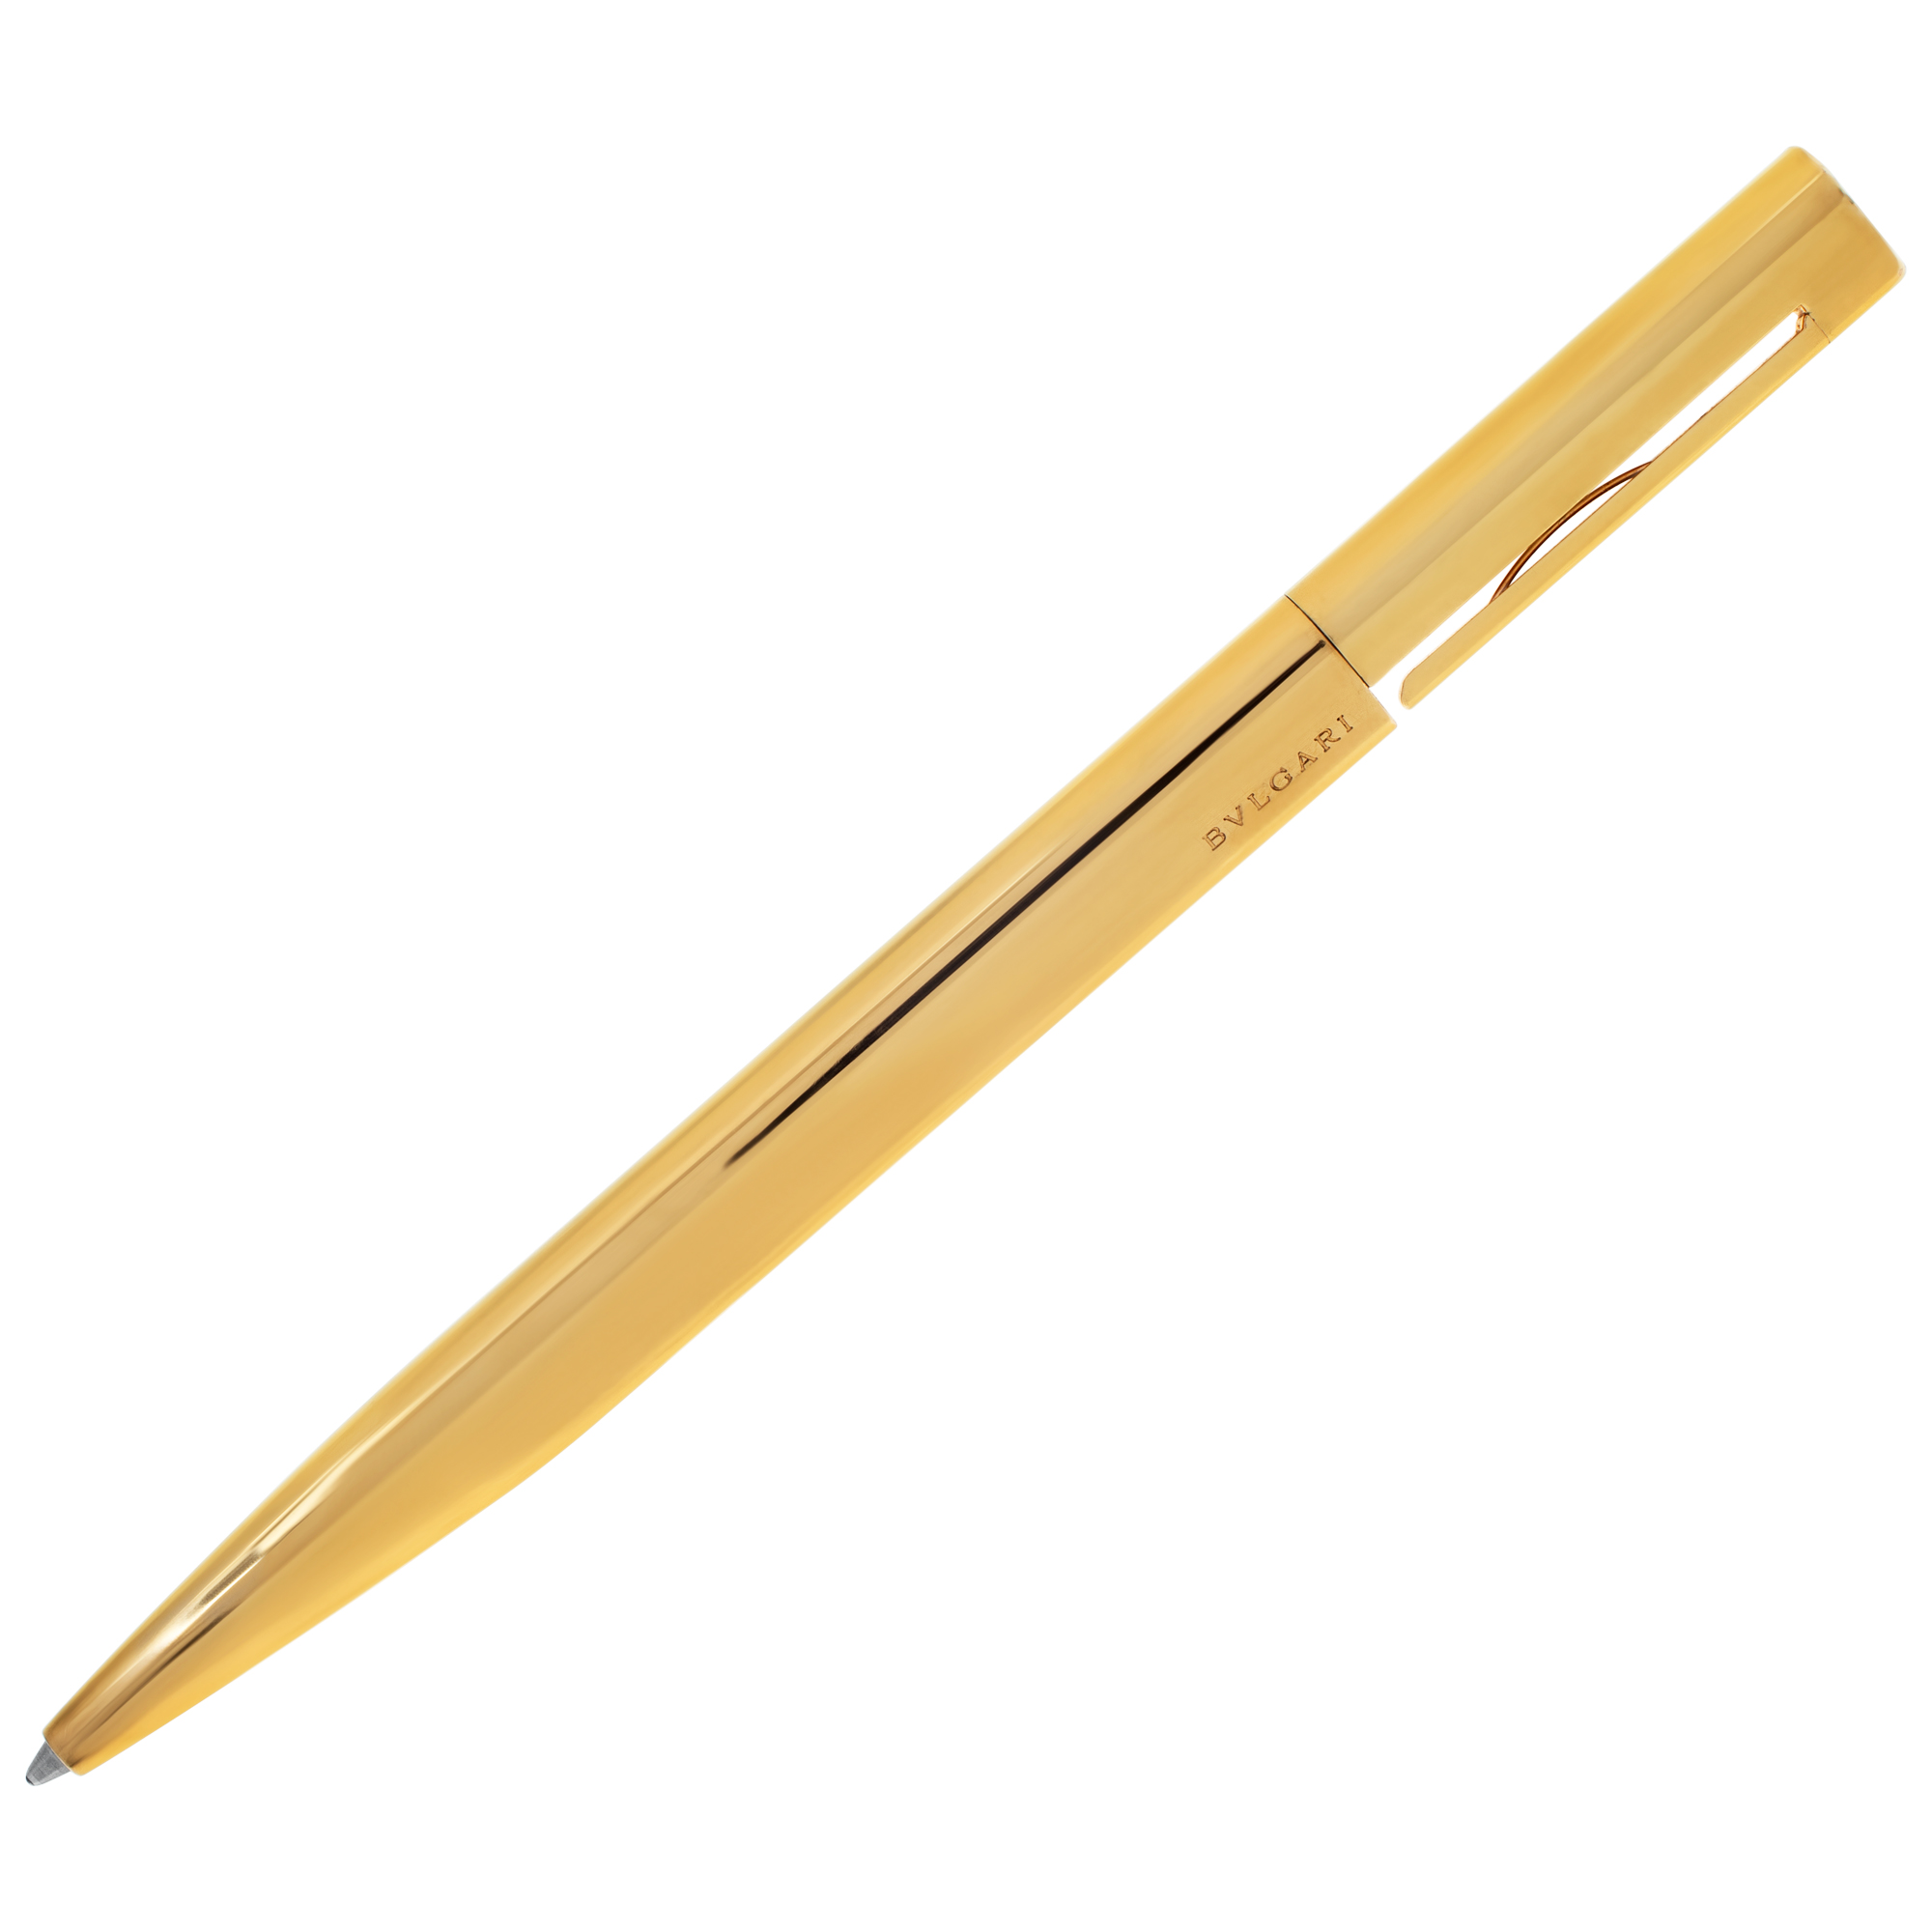 Bvlgari 18k yellow gold plated pen image 1